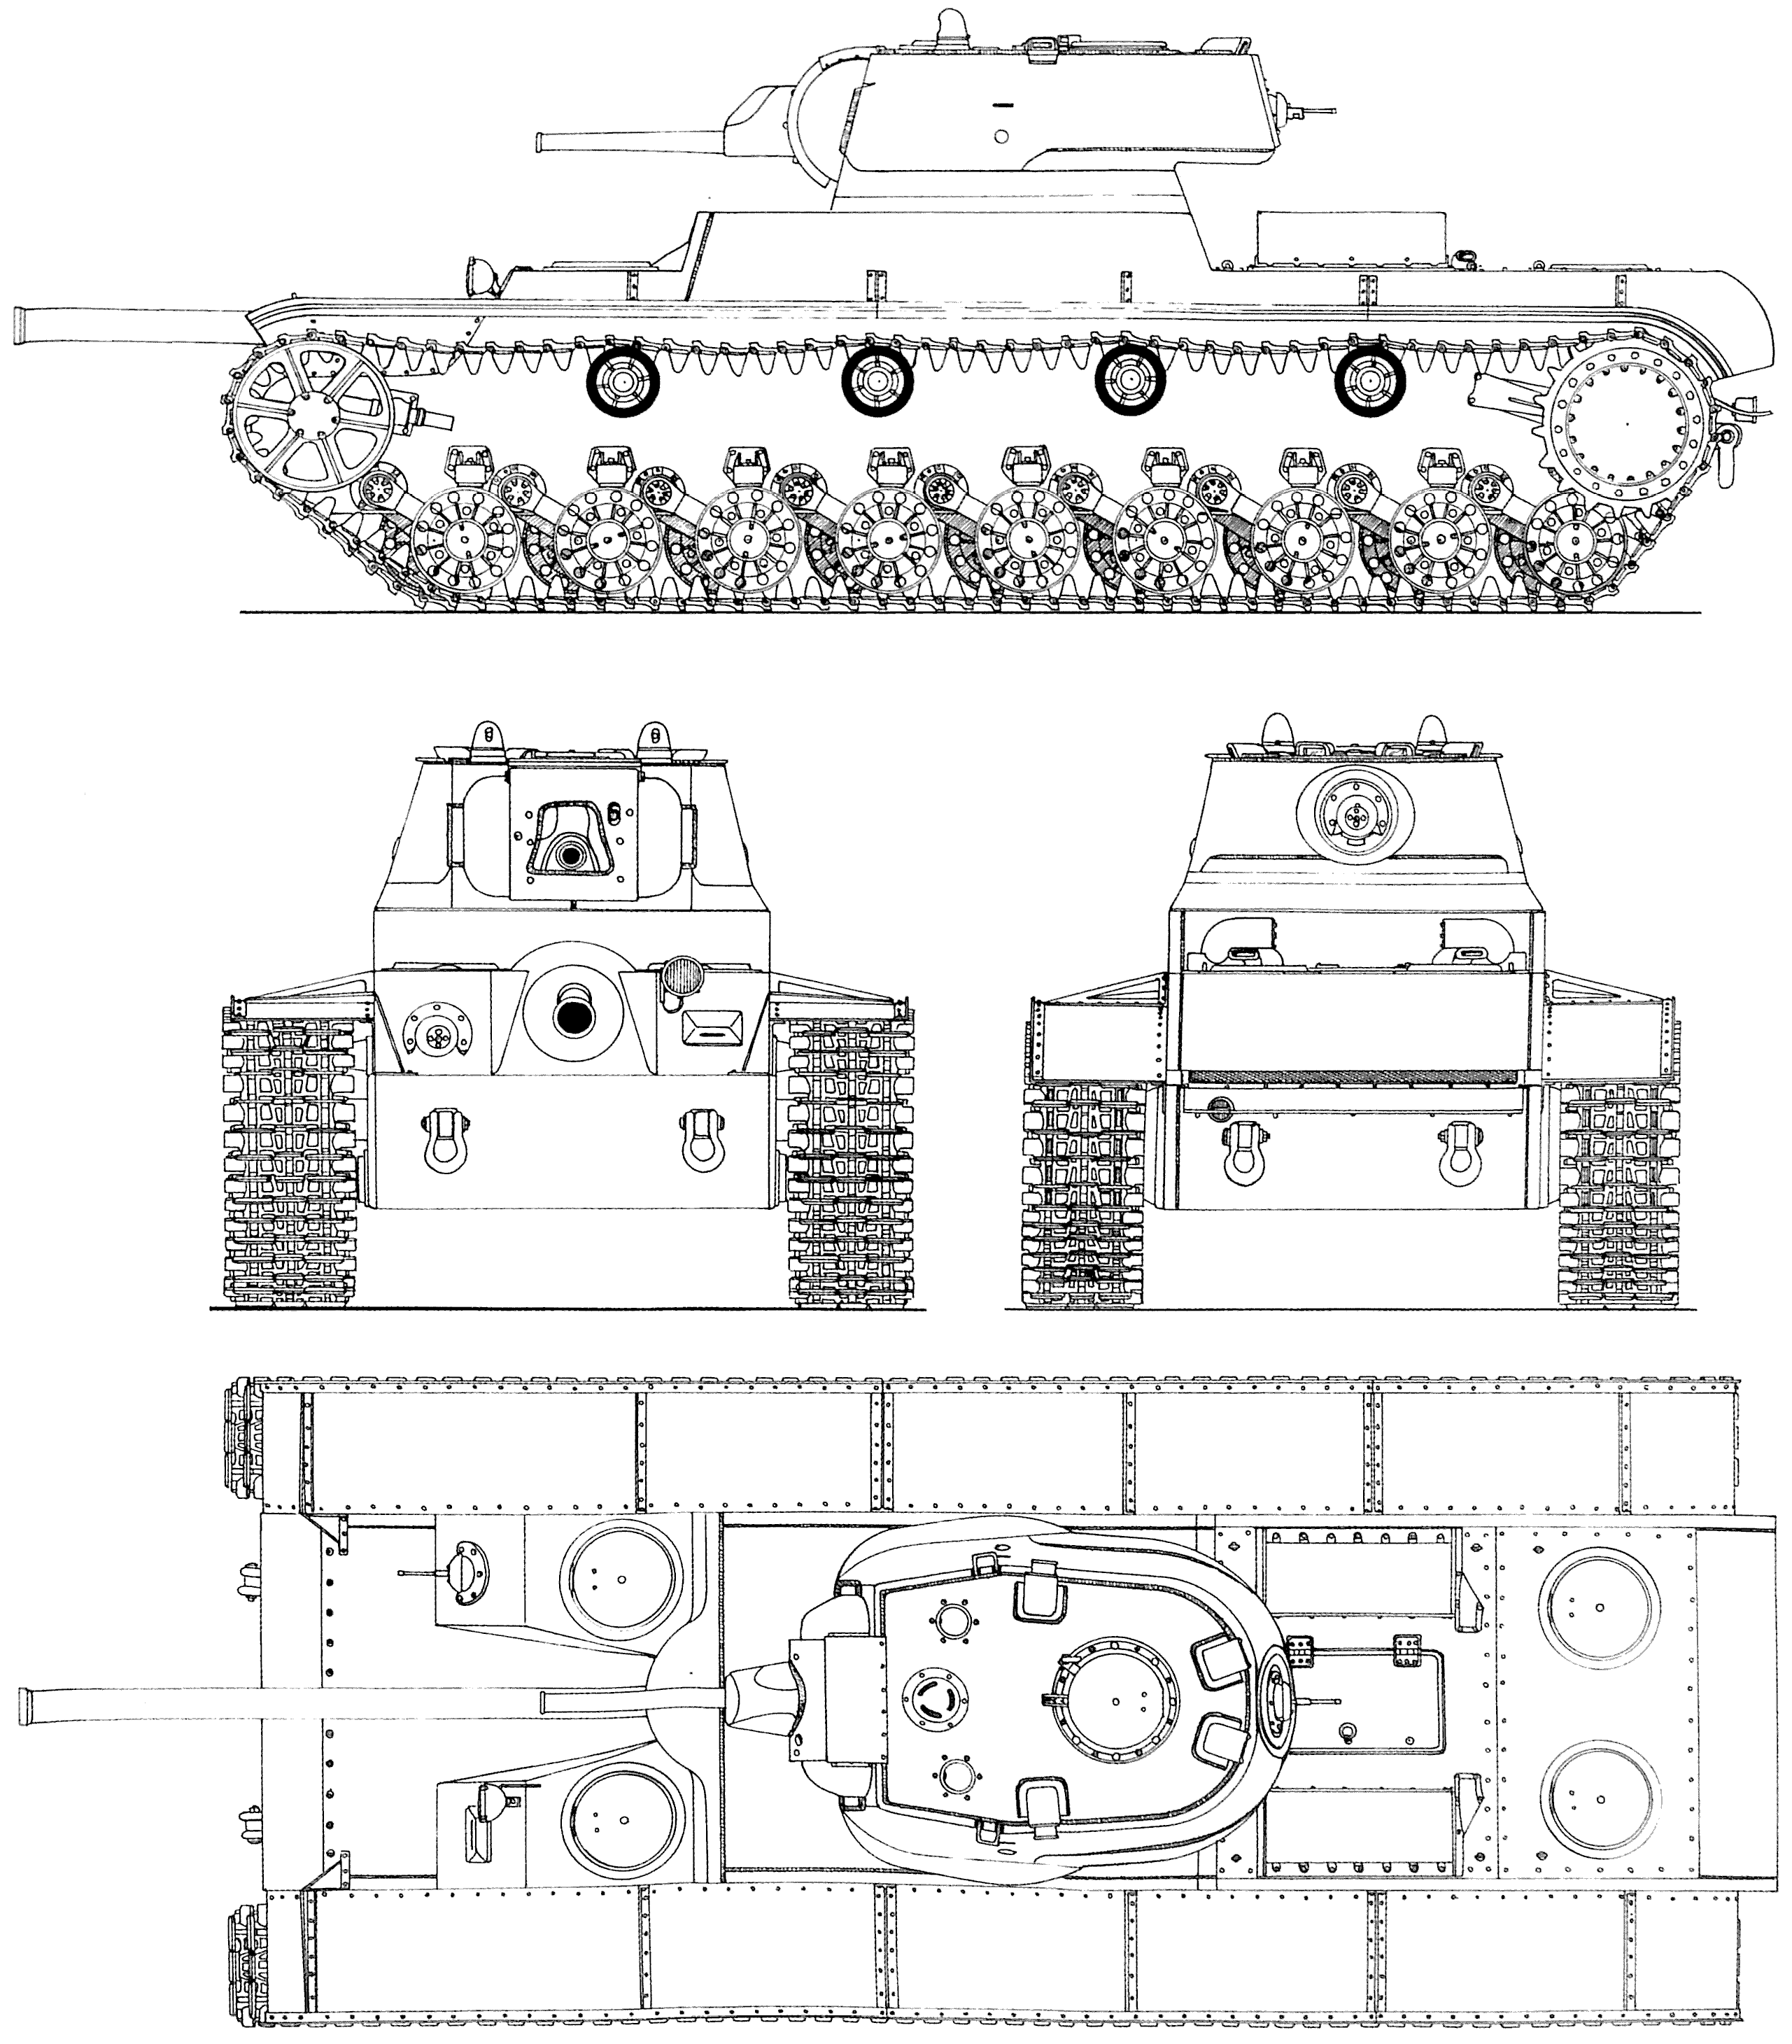 KV-4 blueprint